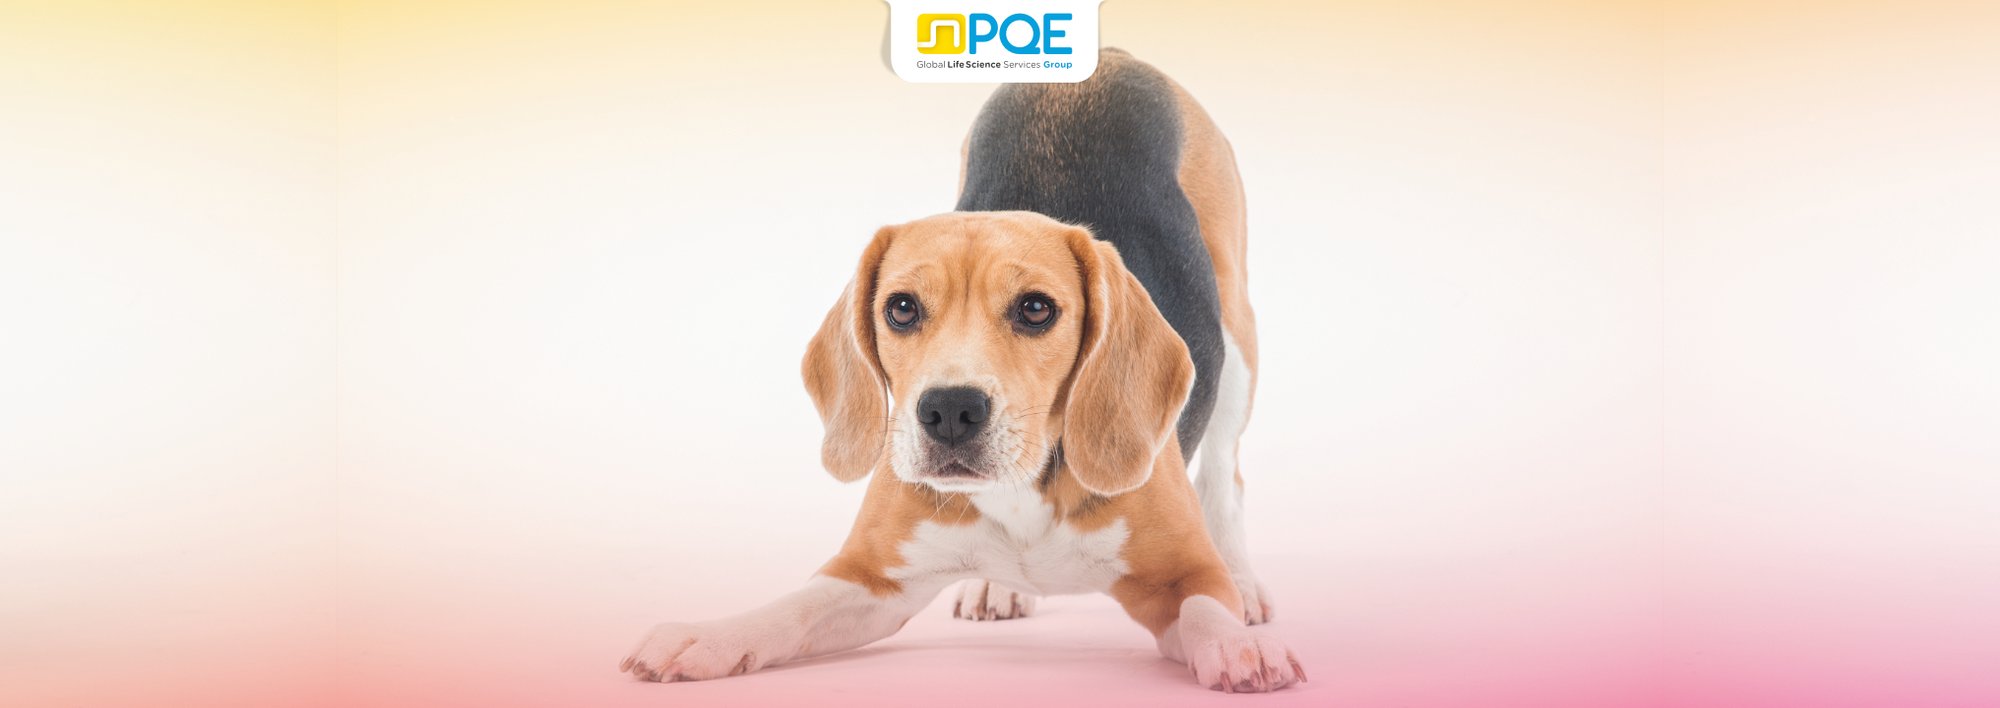 CBD for Canine Epilepsy_Site PQE